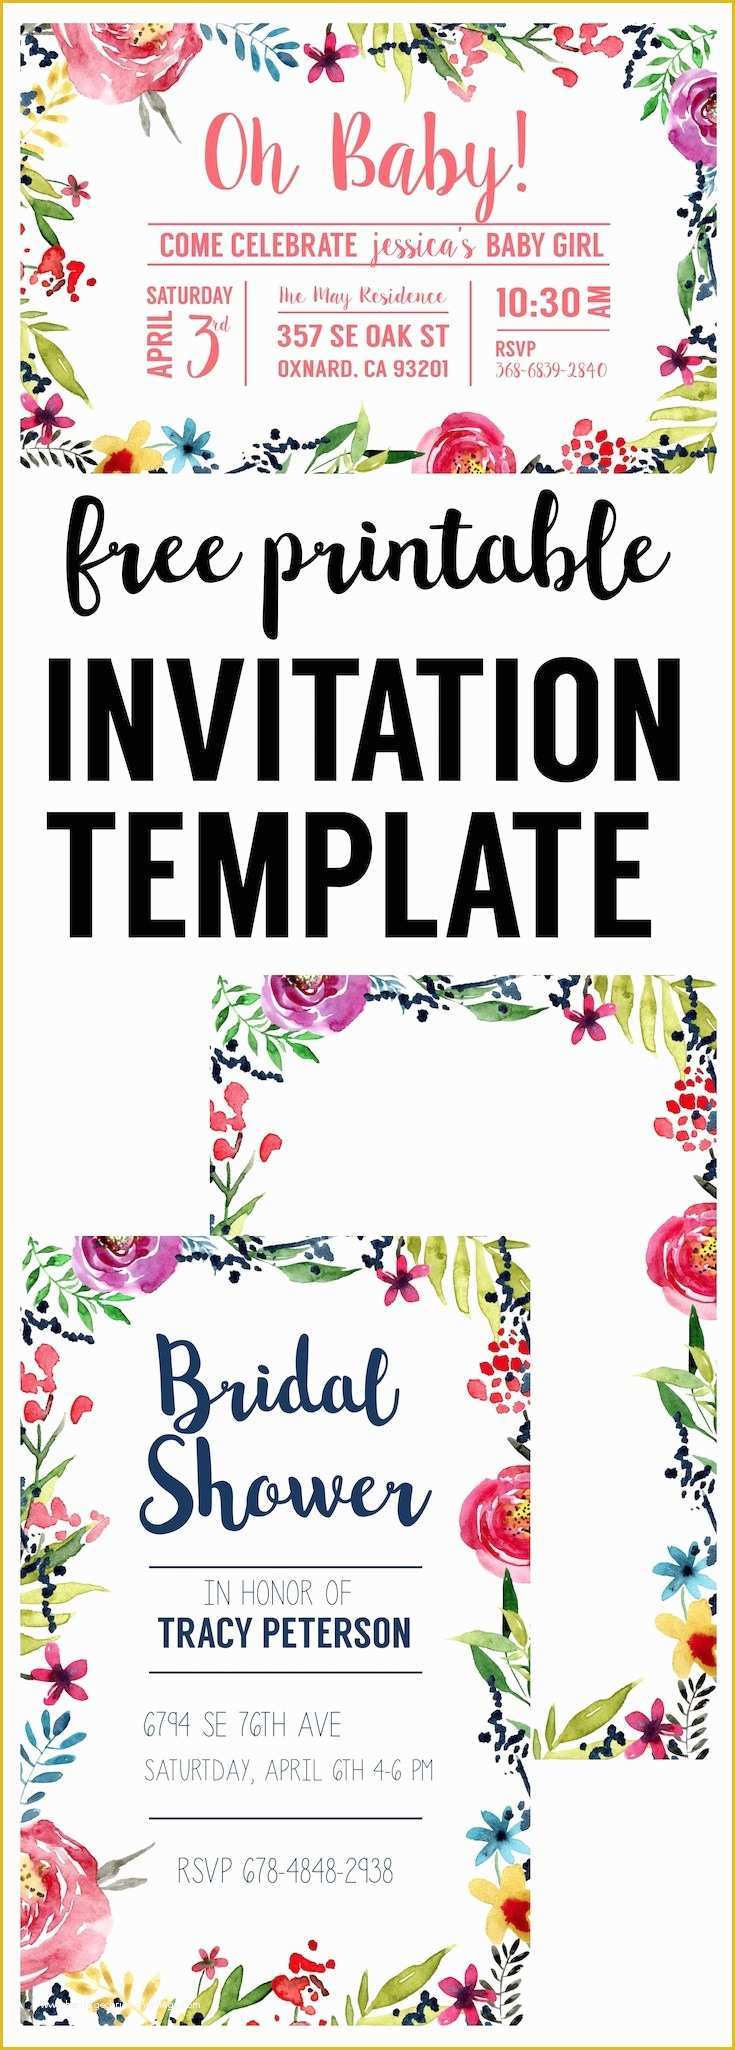 Free Diy Invitation Templates Of Floral Borders Invitations Free Printable Invitation